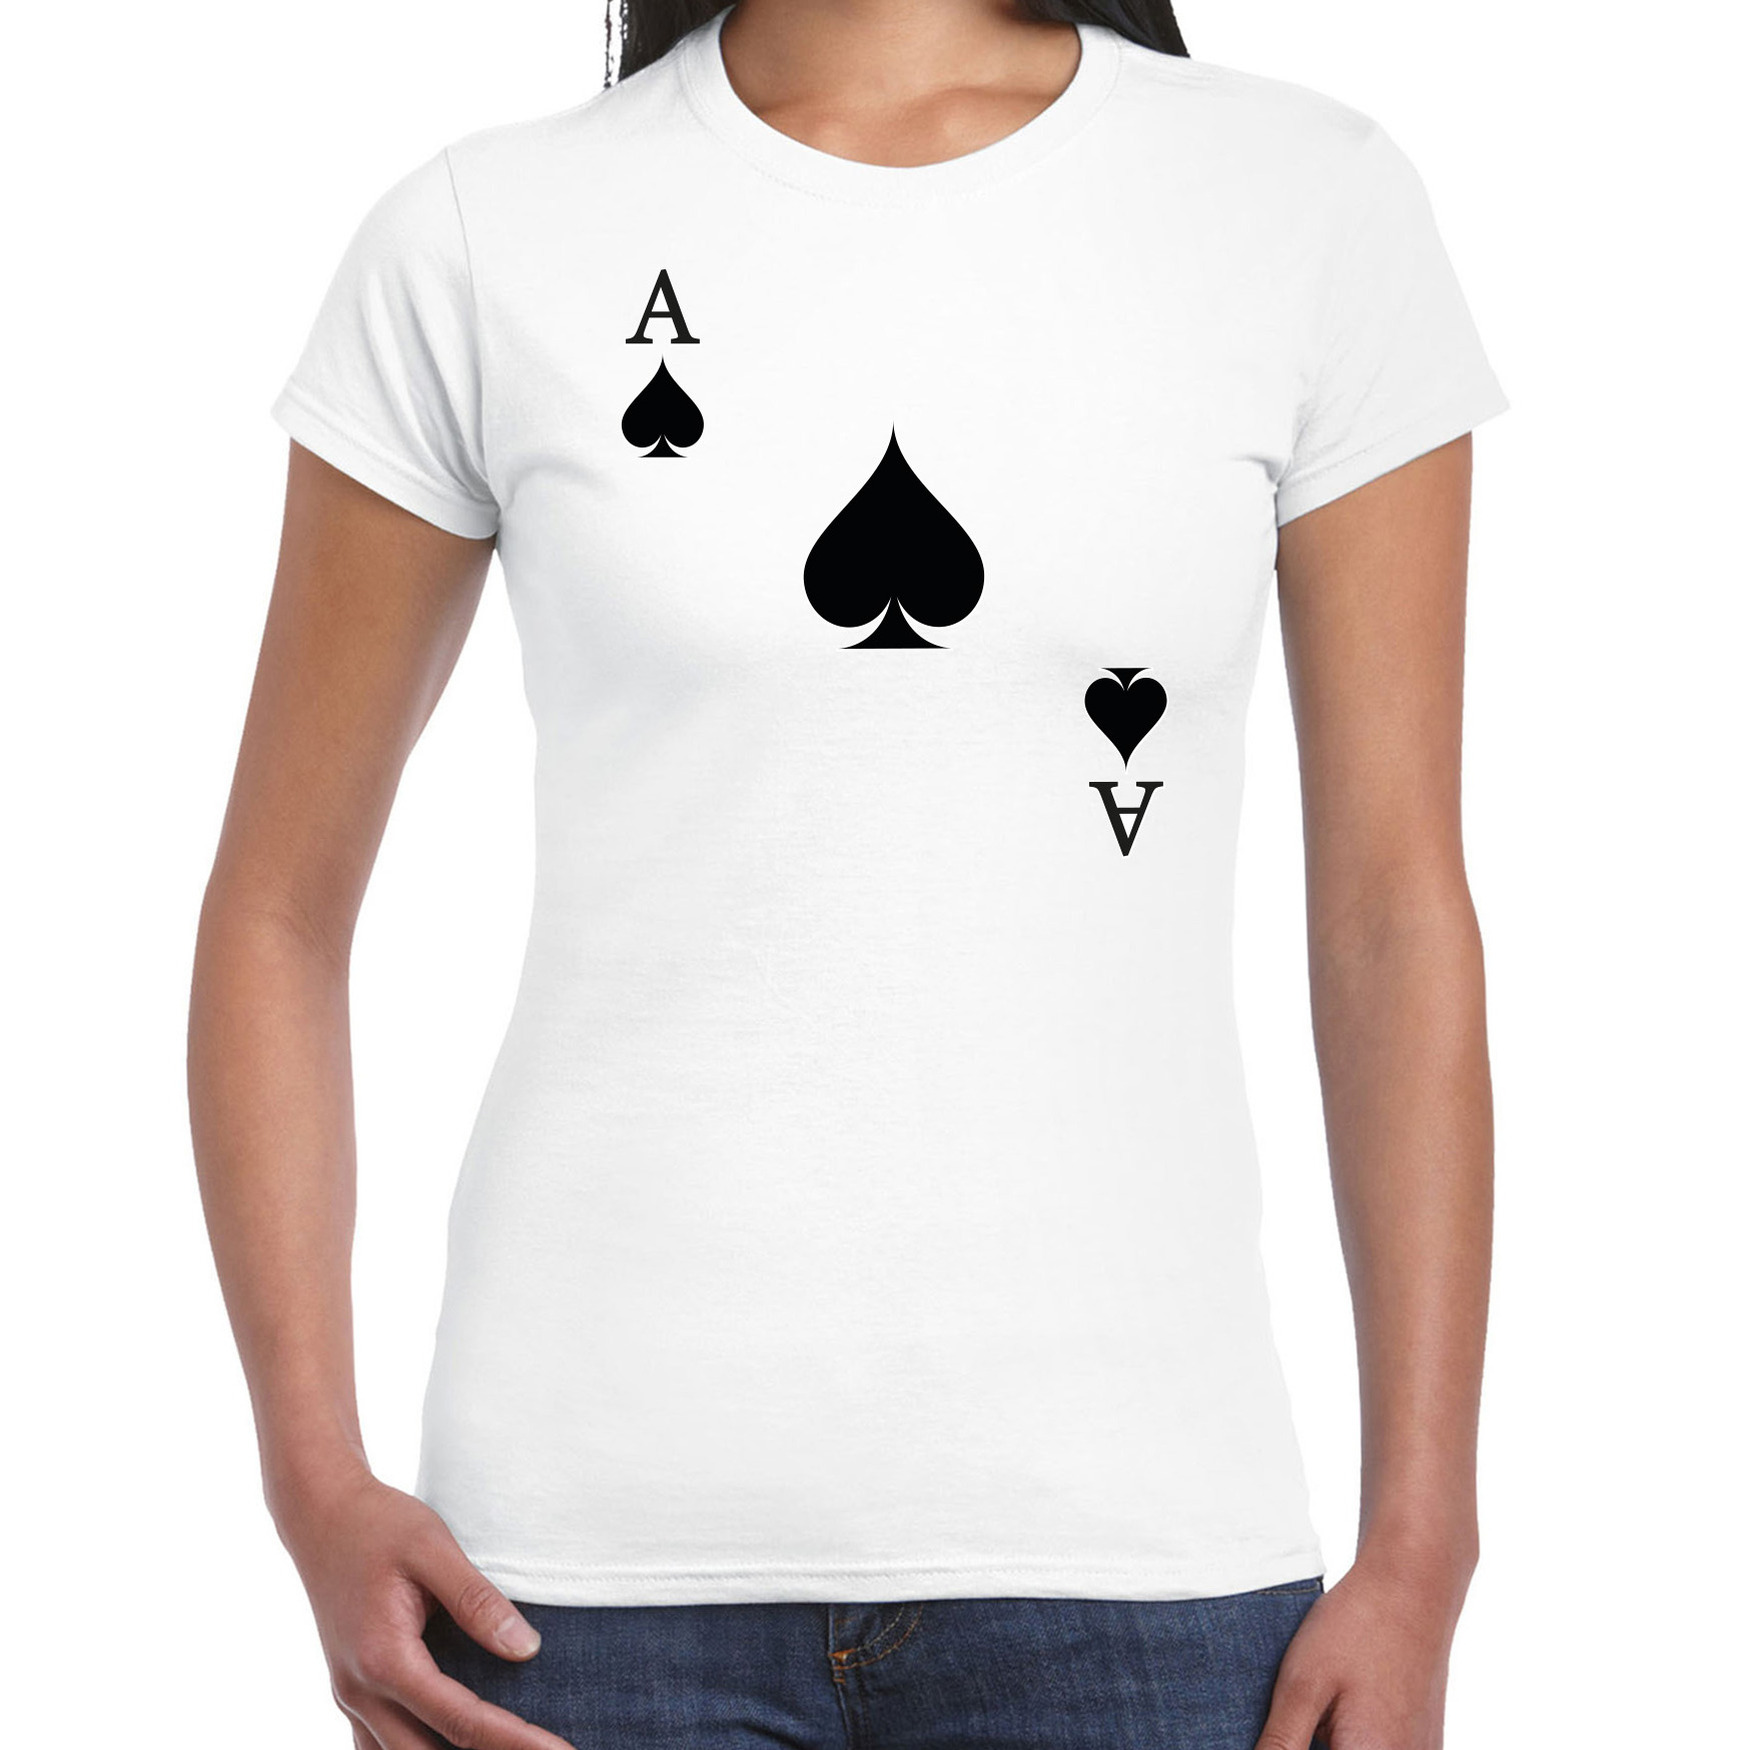 Bellatio Decorations casino thema verkleed t-shirt dames - schoppen aas - wit - poker t-shirt